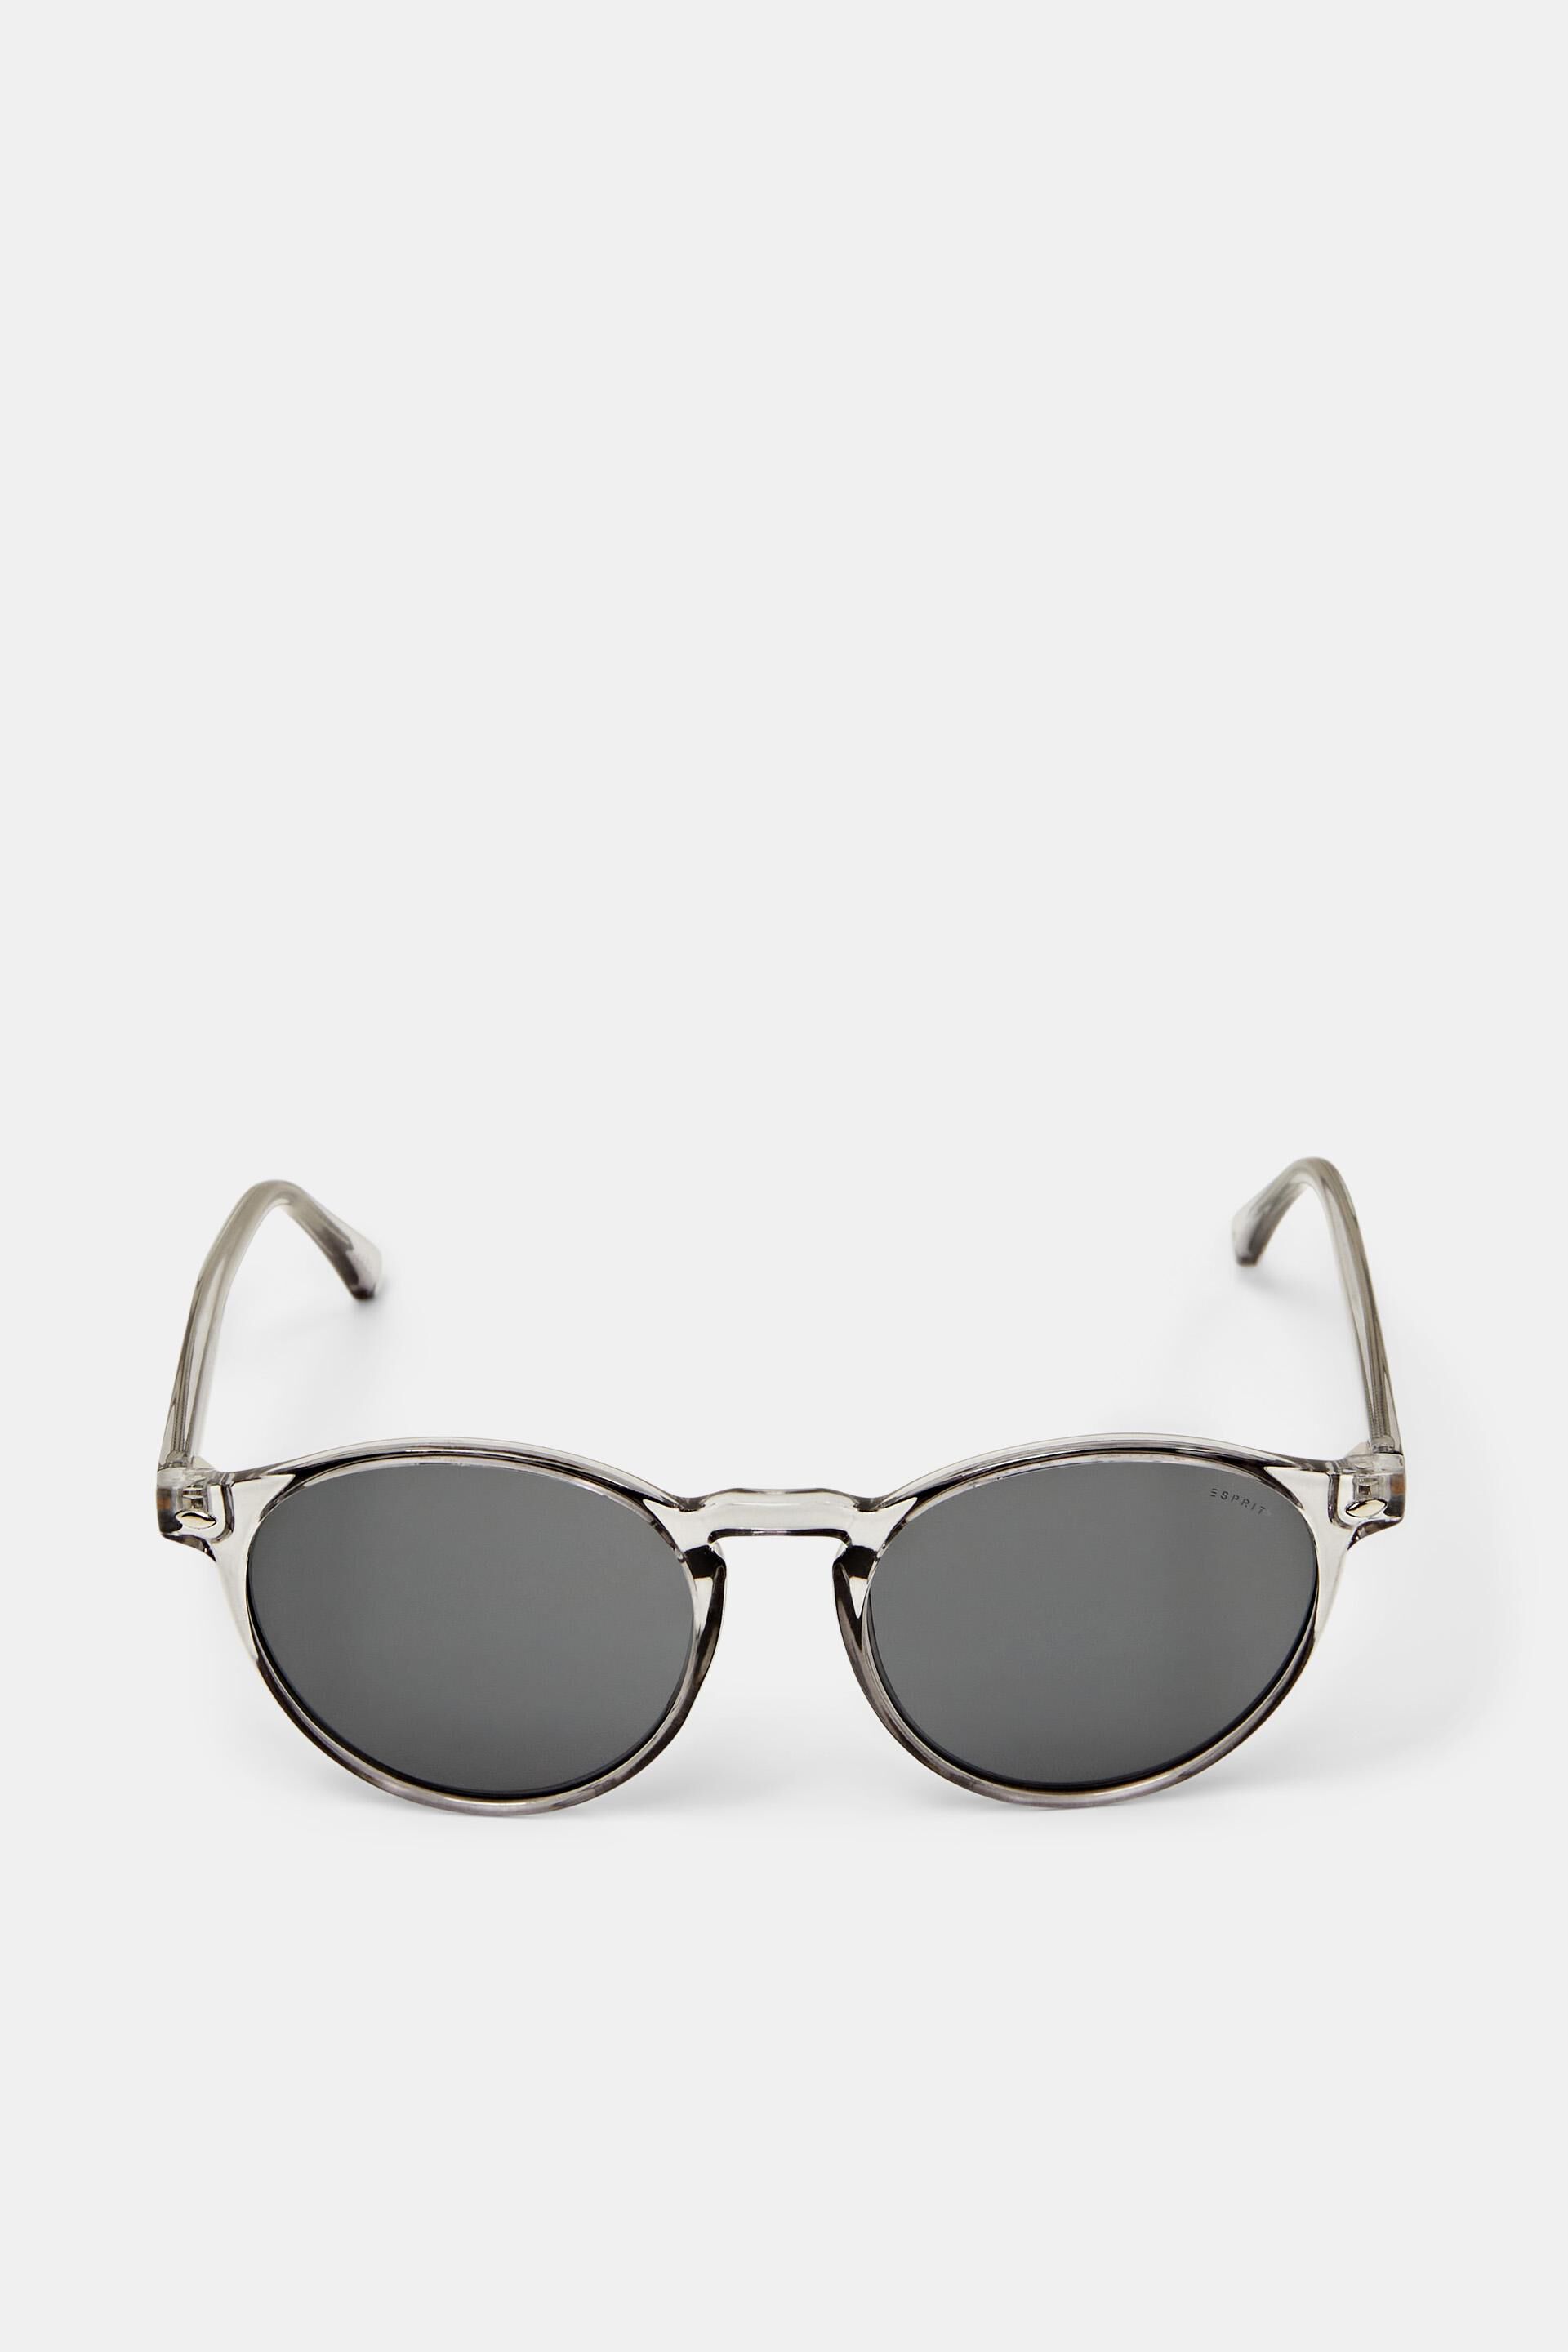 Esprit Sunglasses frame with transparent round